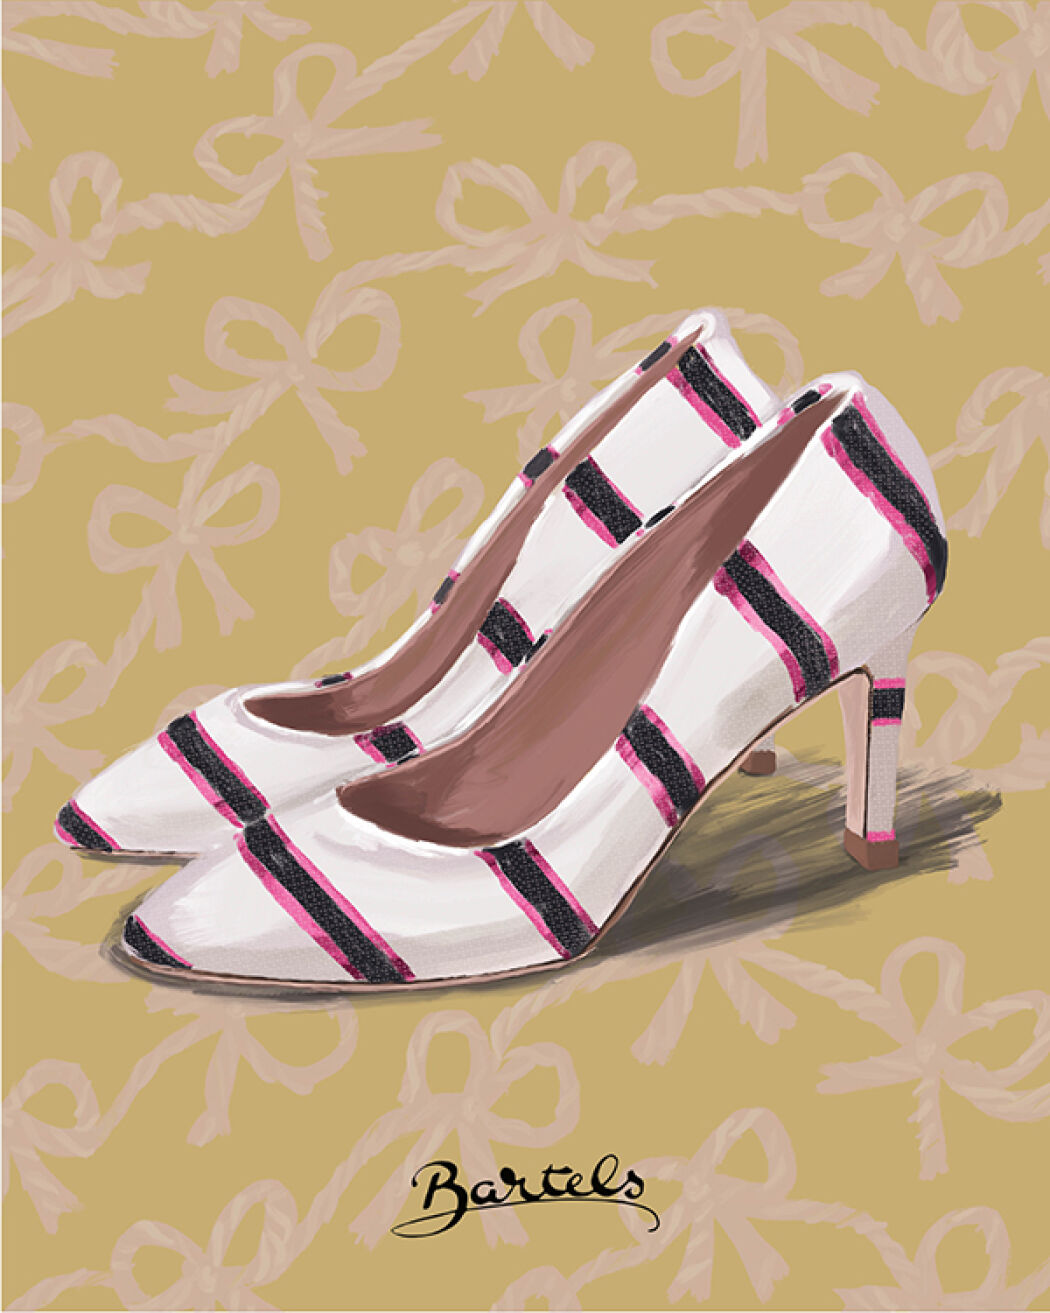 Fashion illustration by Christina Gliha for Bartels Shoe brand campaign